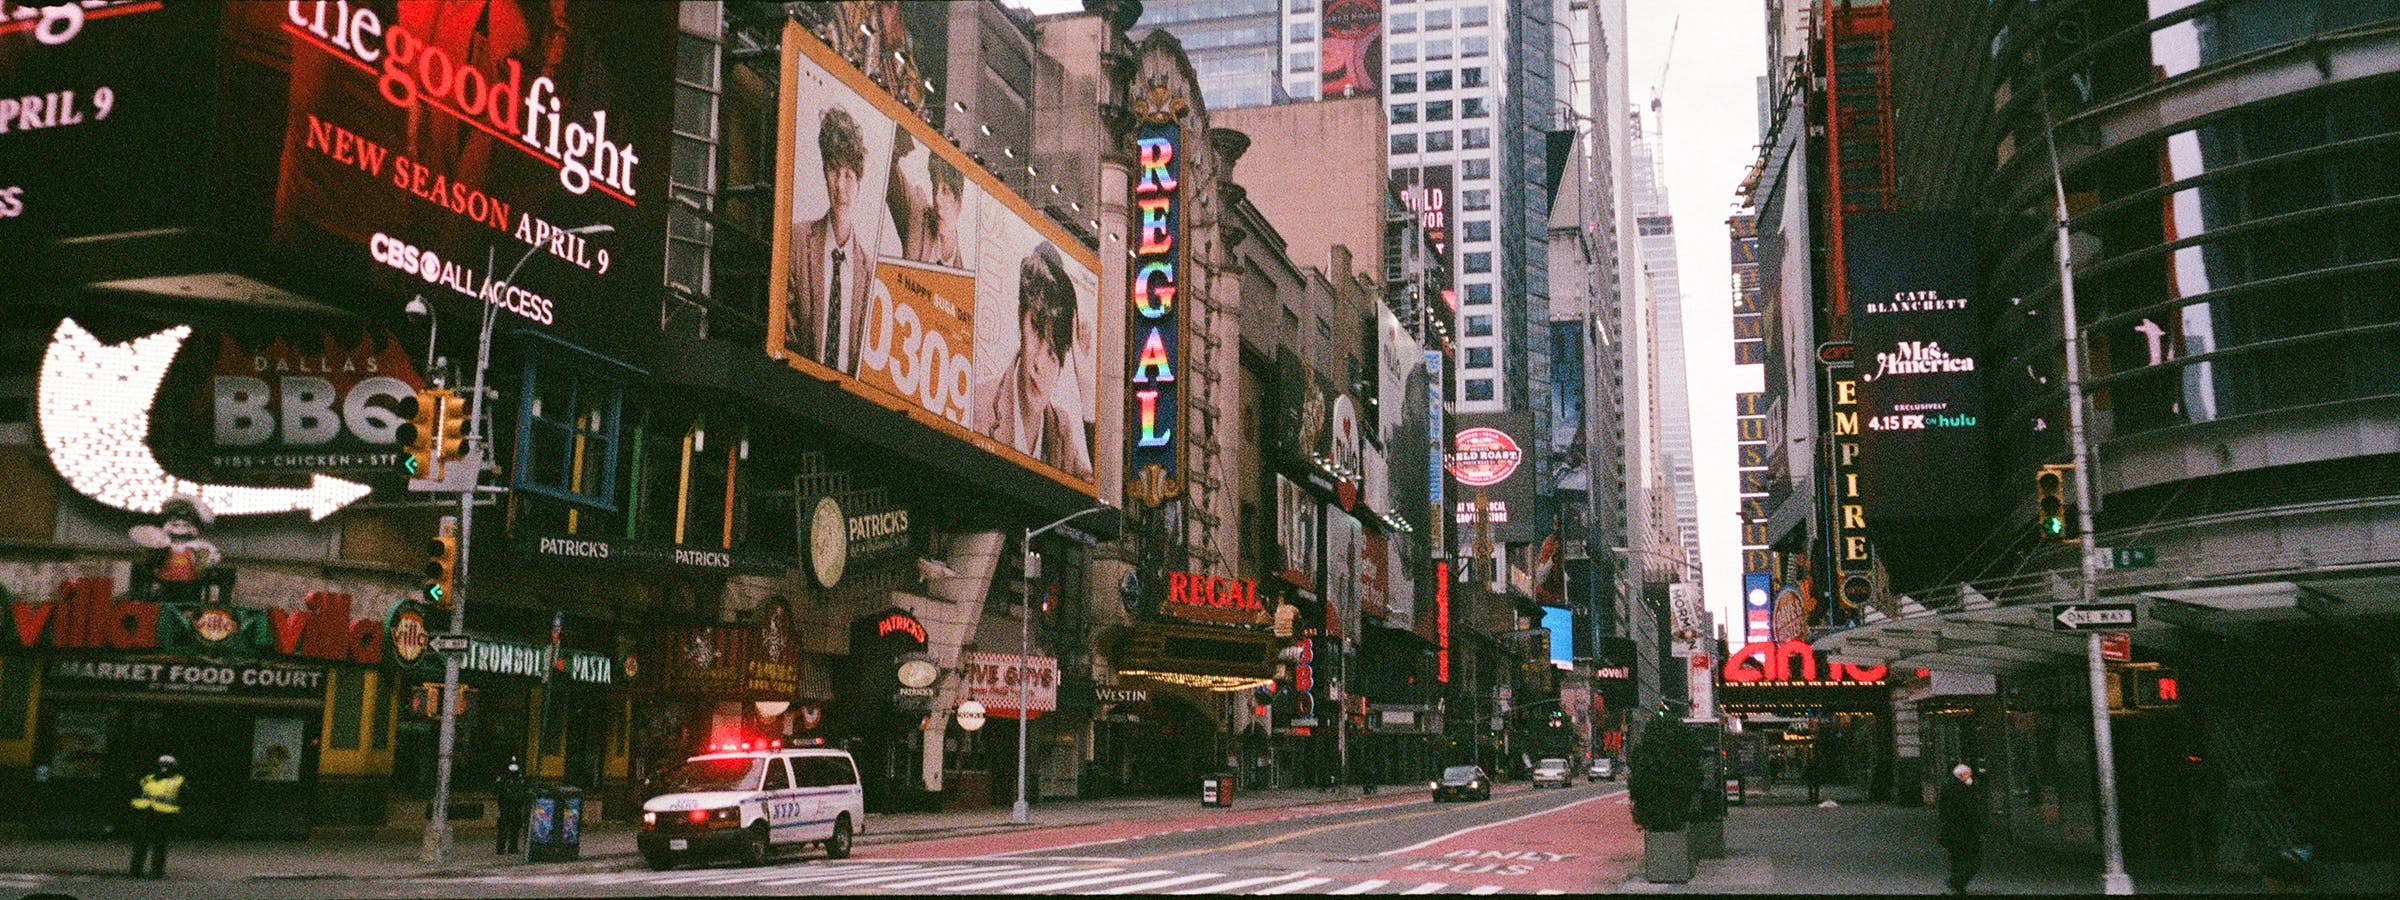 Pandemic Times Square